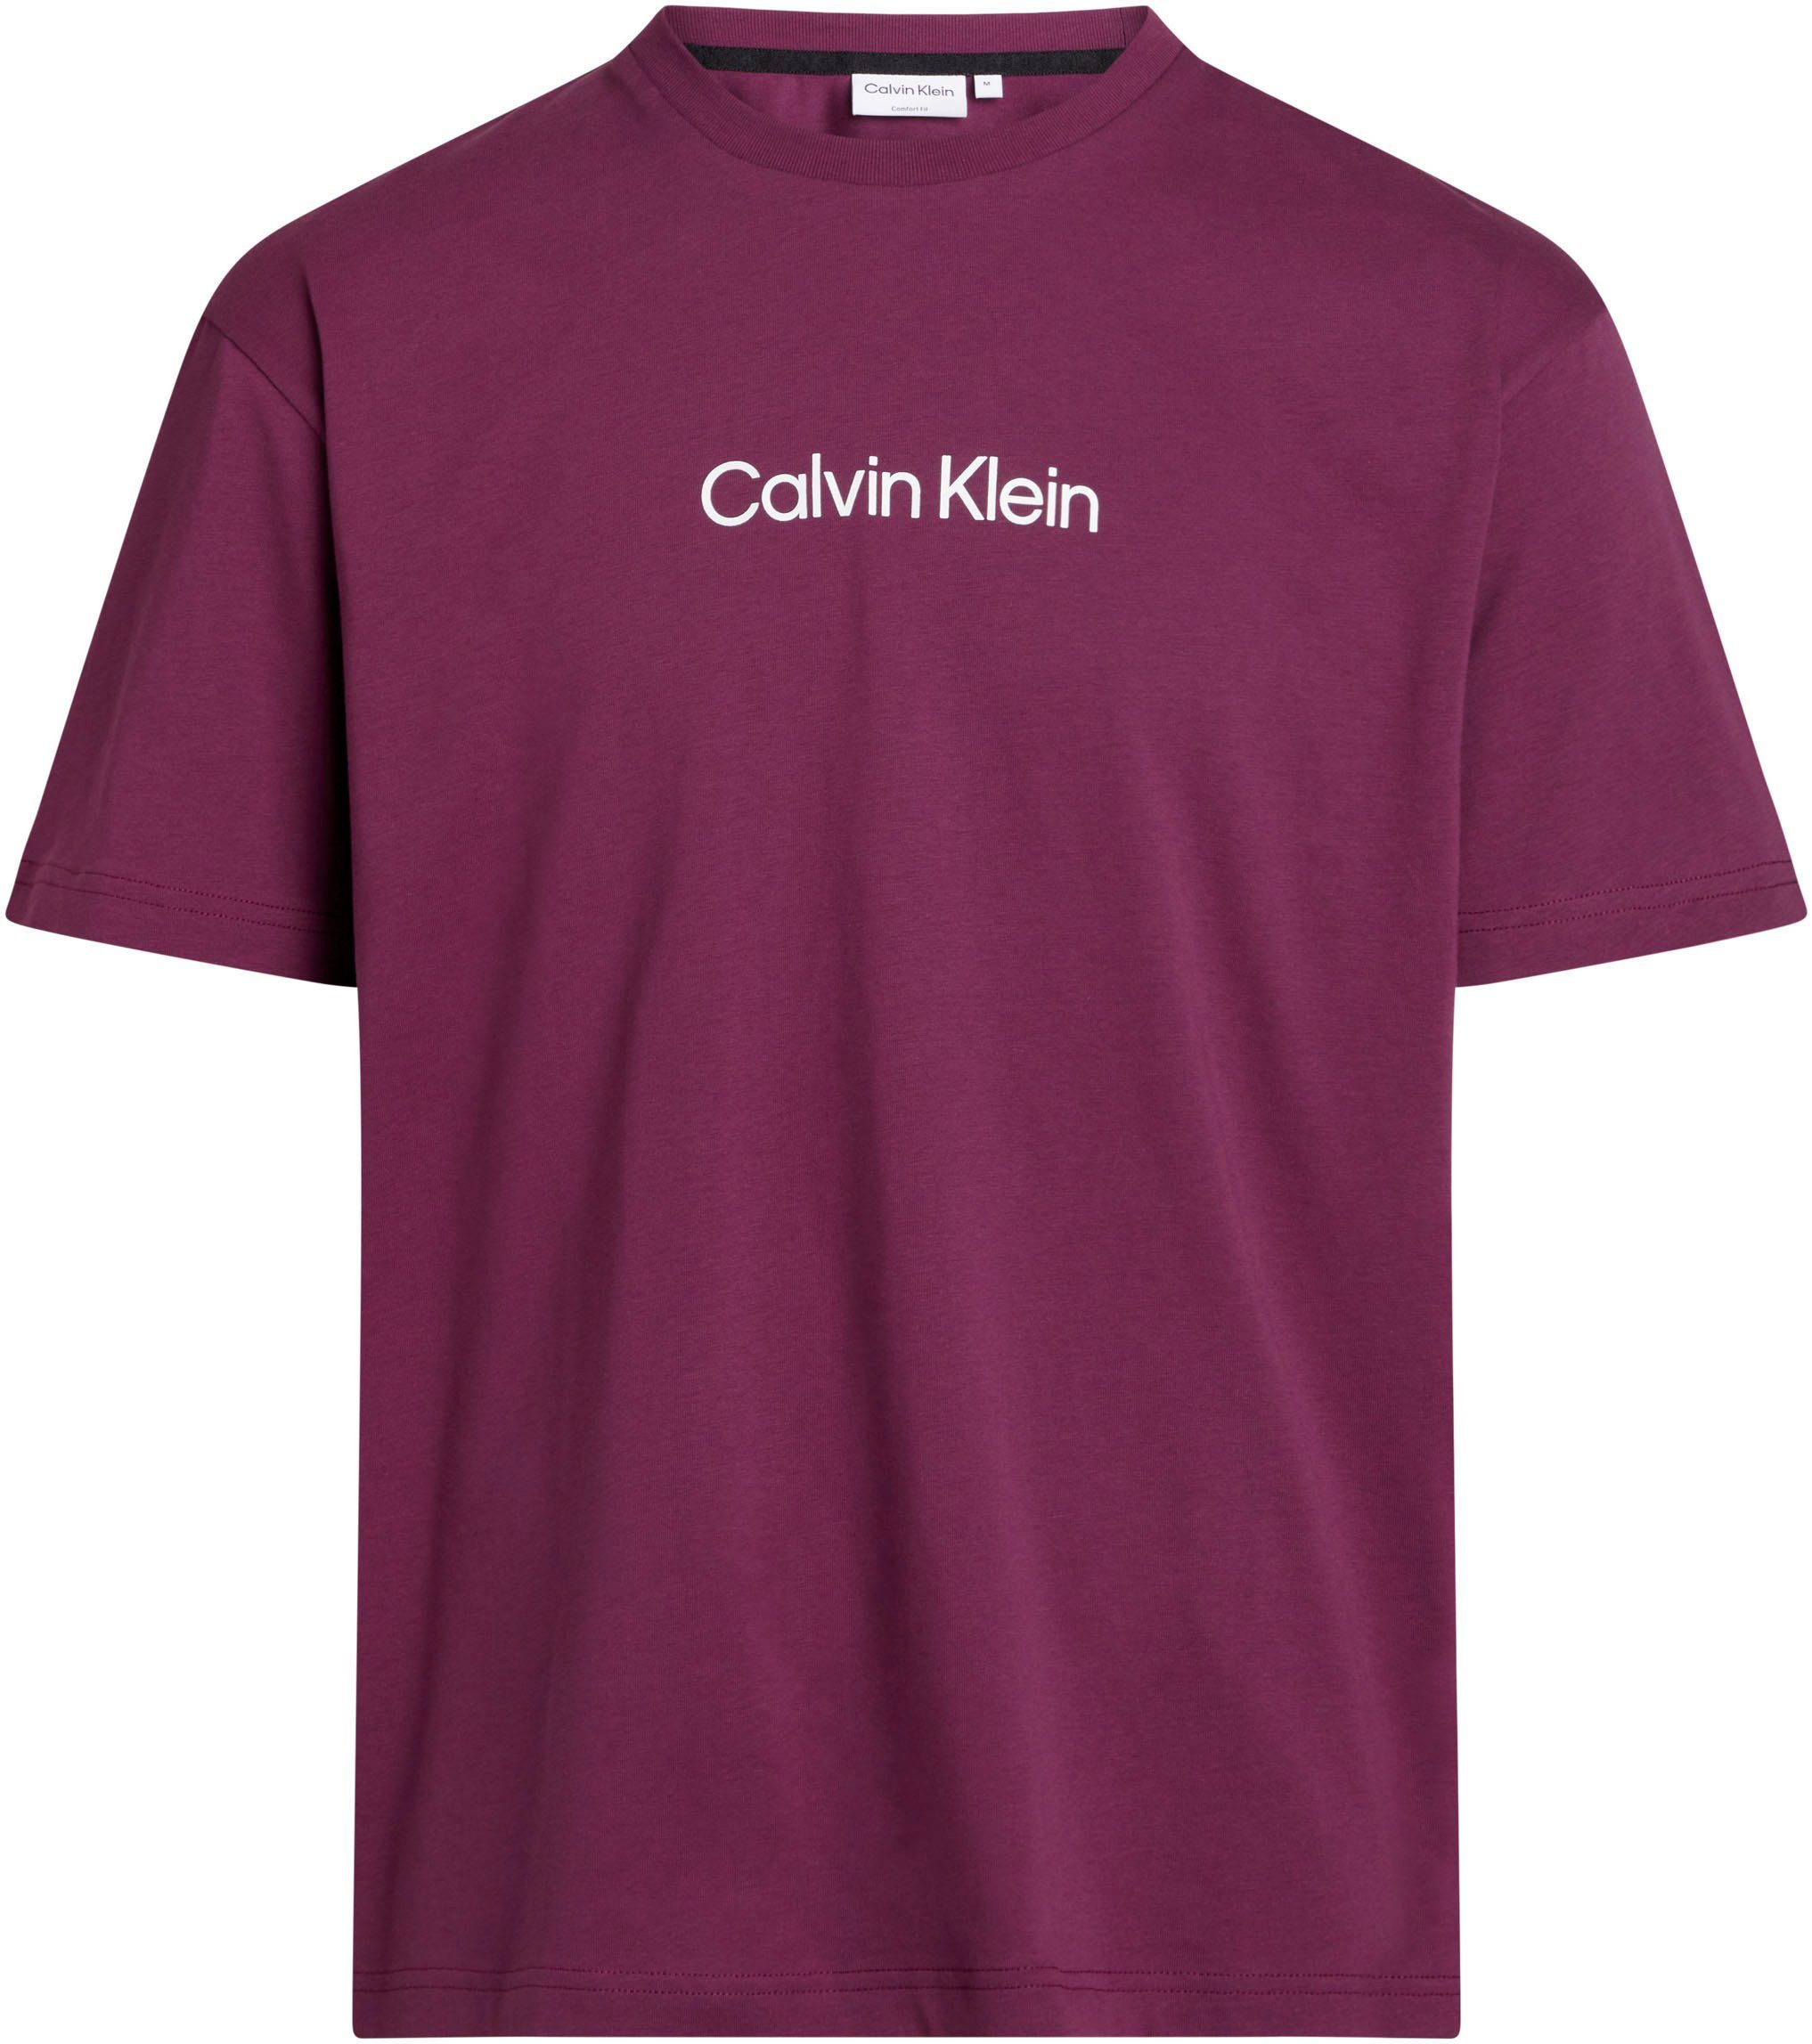 Calvin Klein aufgedrucktem HERO Plum Italian Markenlabel T-Shirt COMFORT T-SHIRT LOGO mit